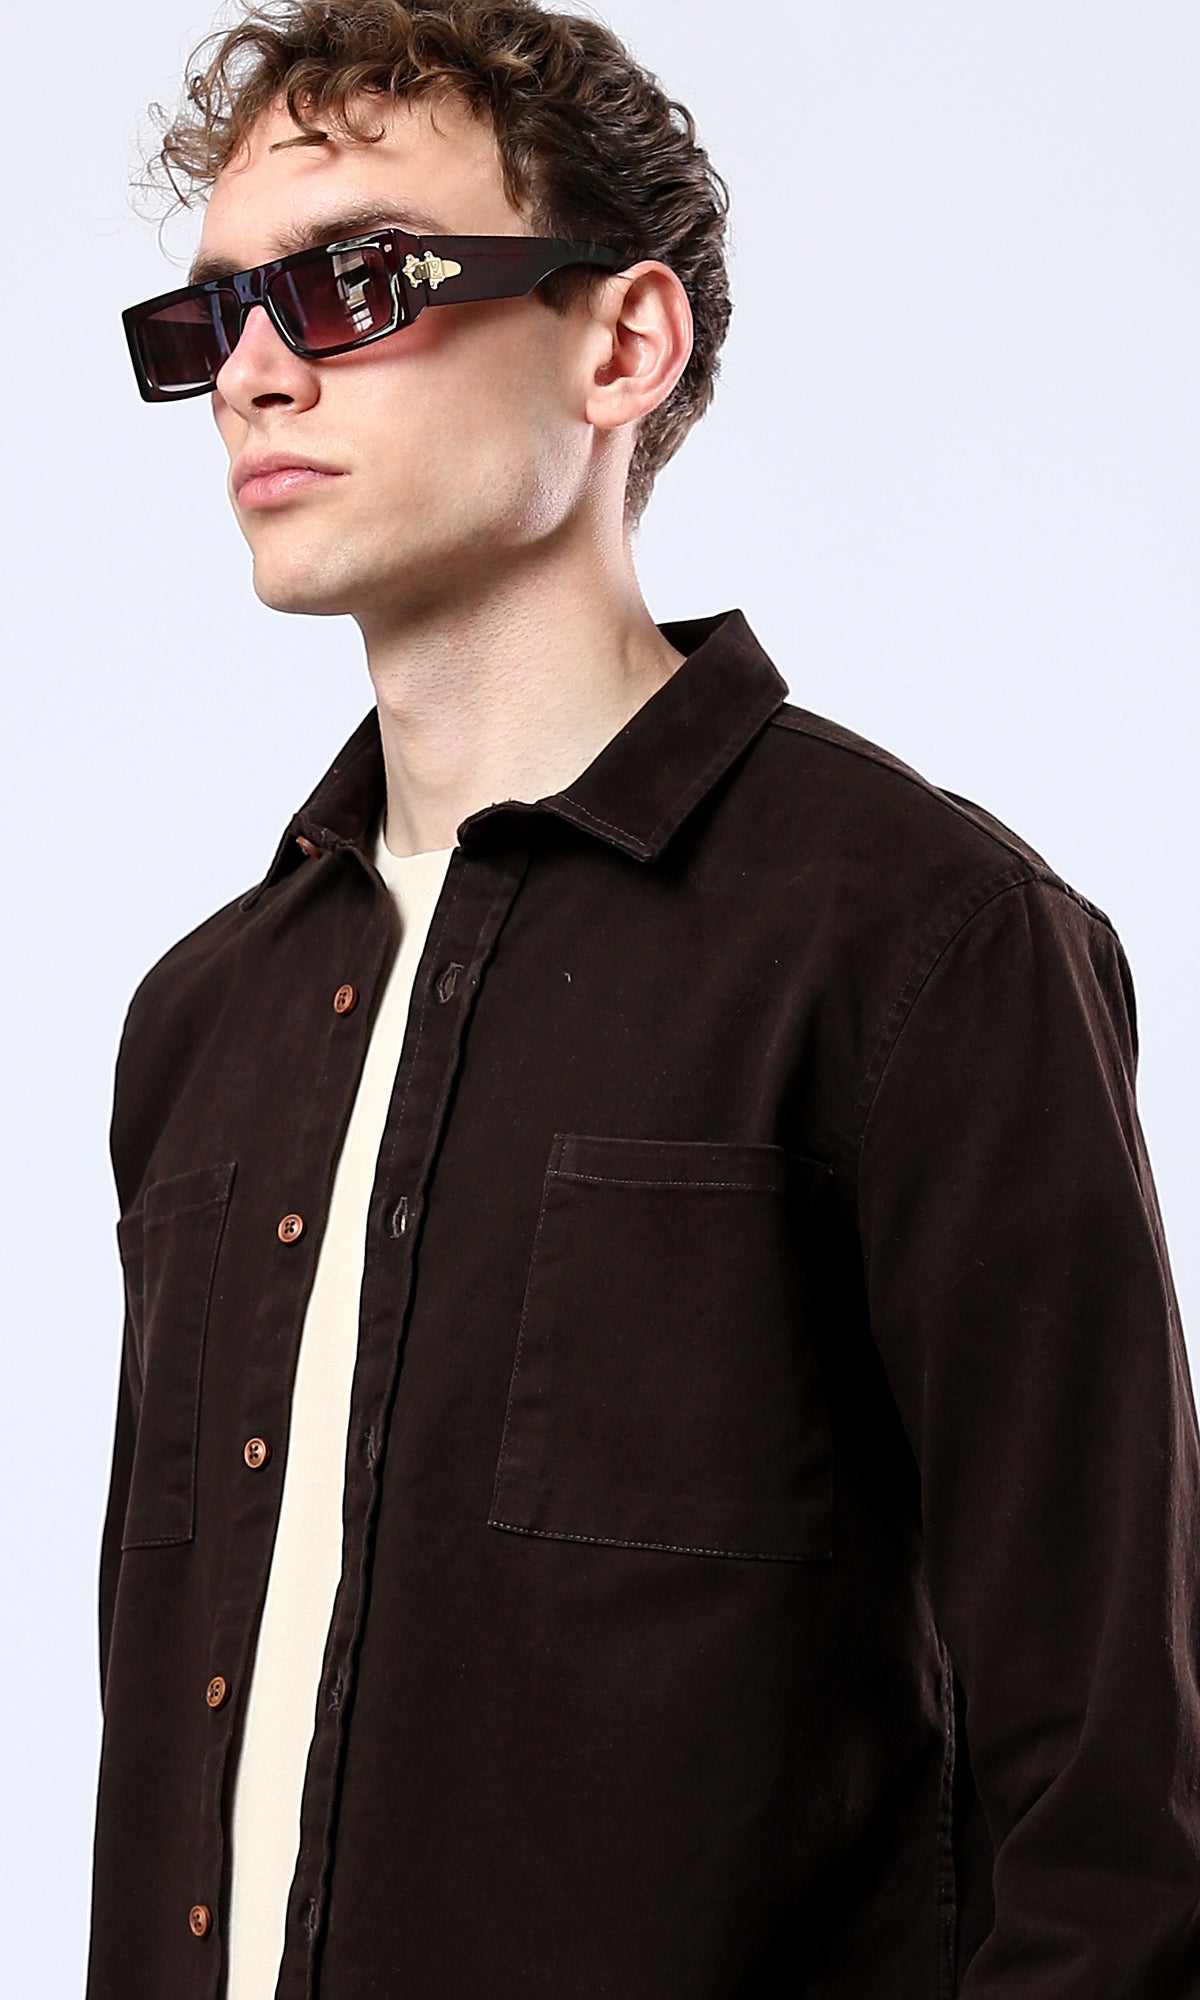 O175644 Classic Collar Long Sleeves Dark Brown Shirt